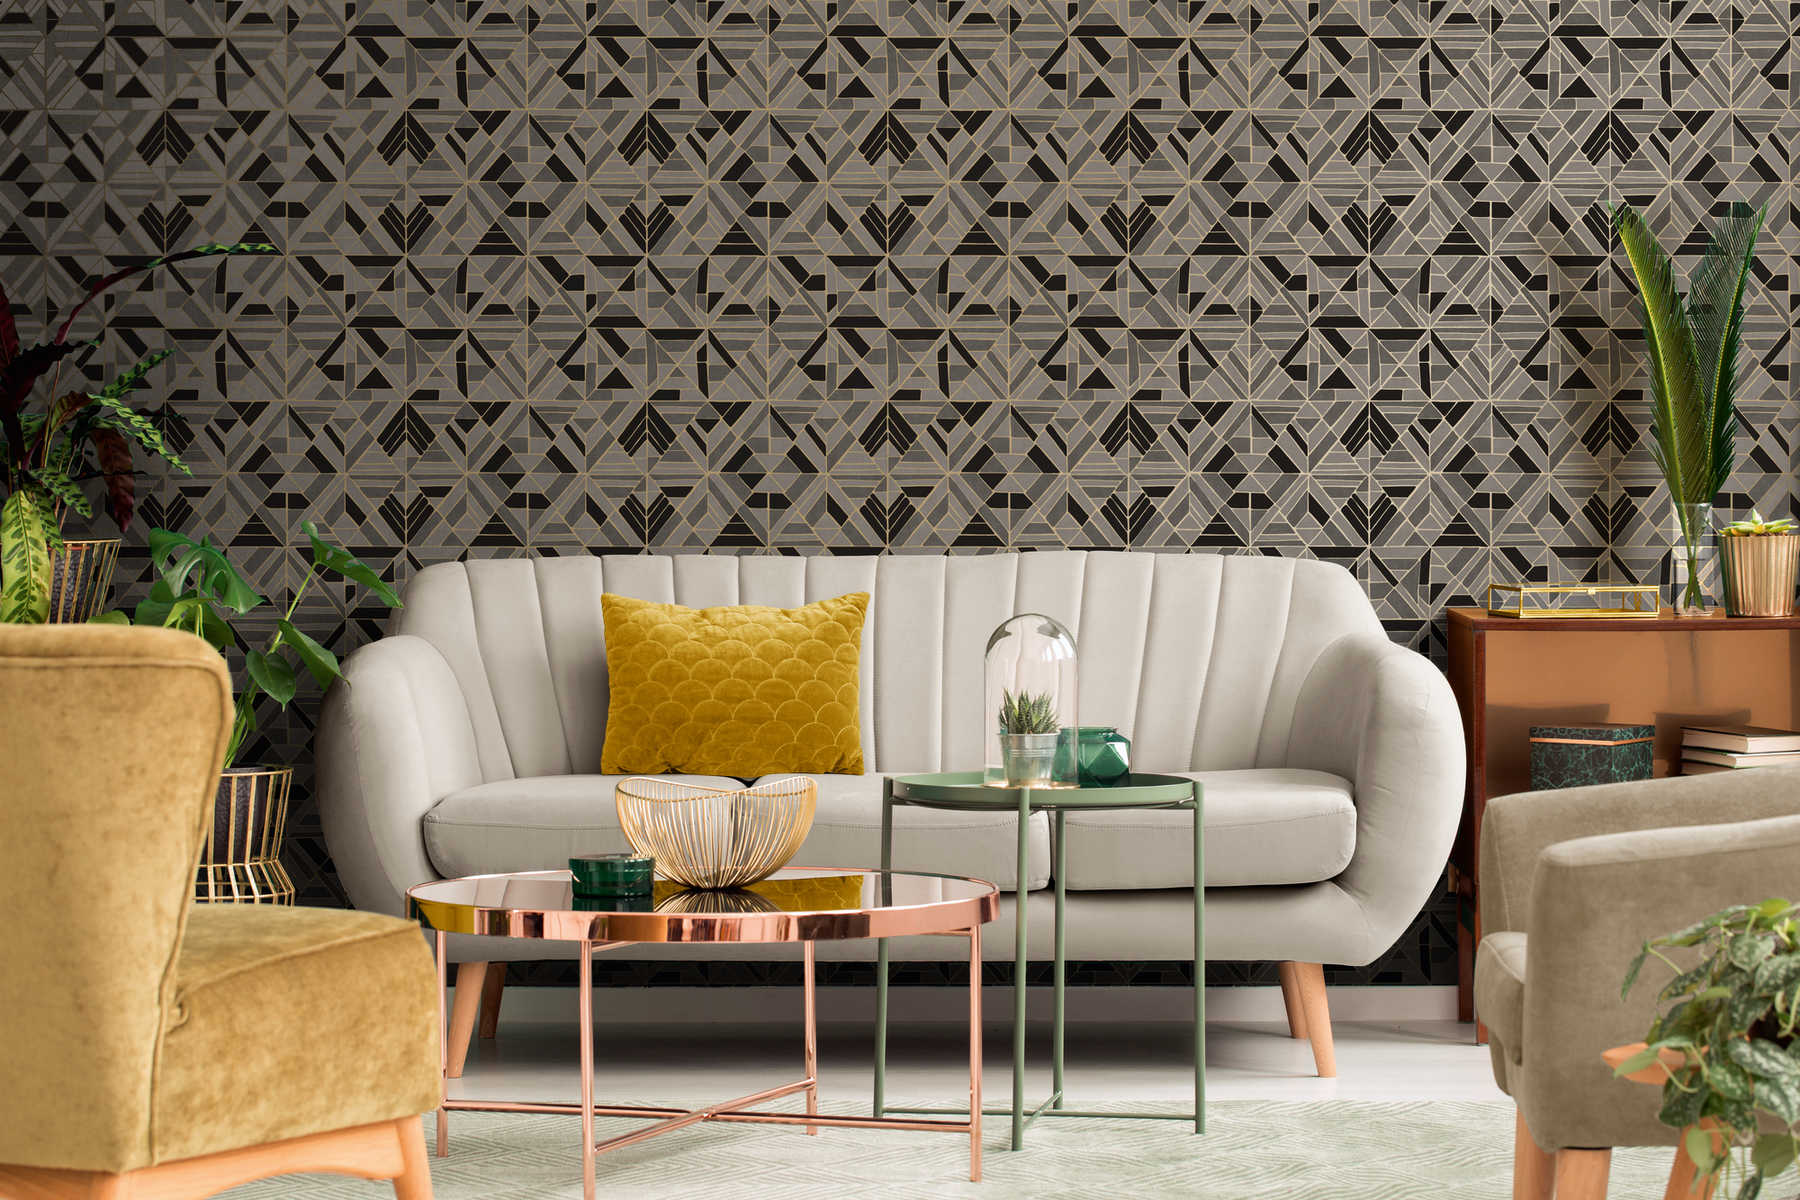             Wallpaper geometric pattern & metallic accents - brown, black, gold
        